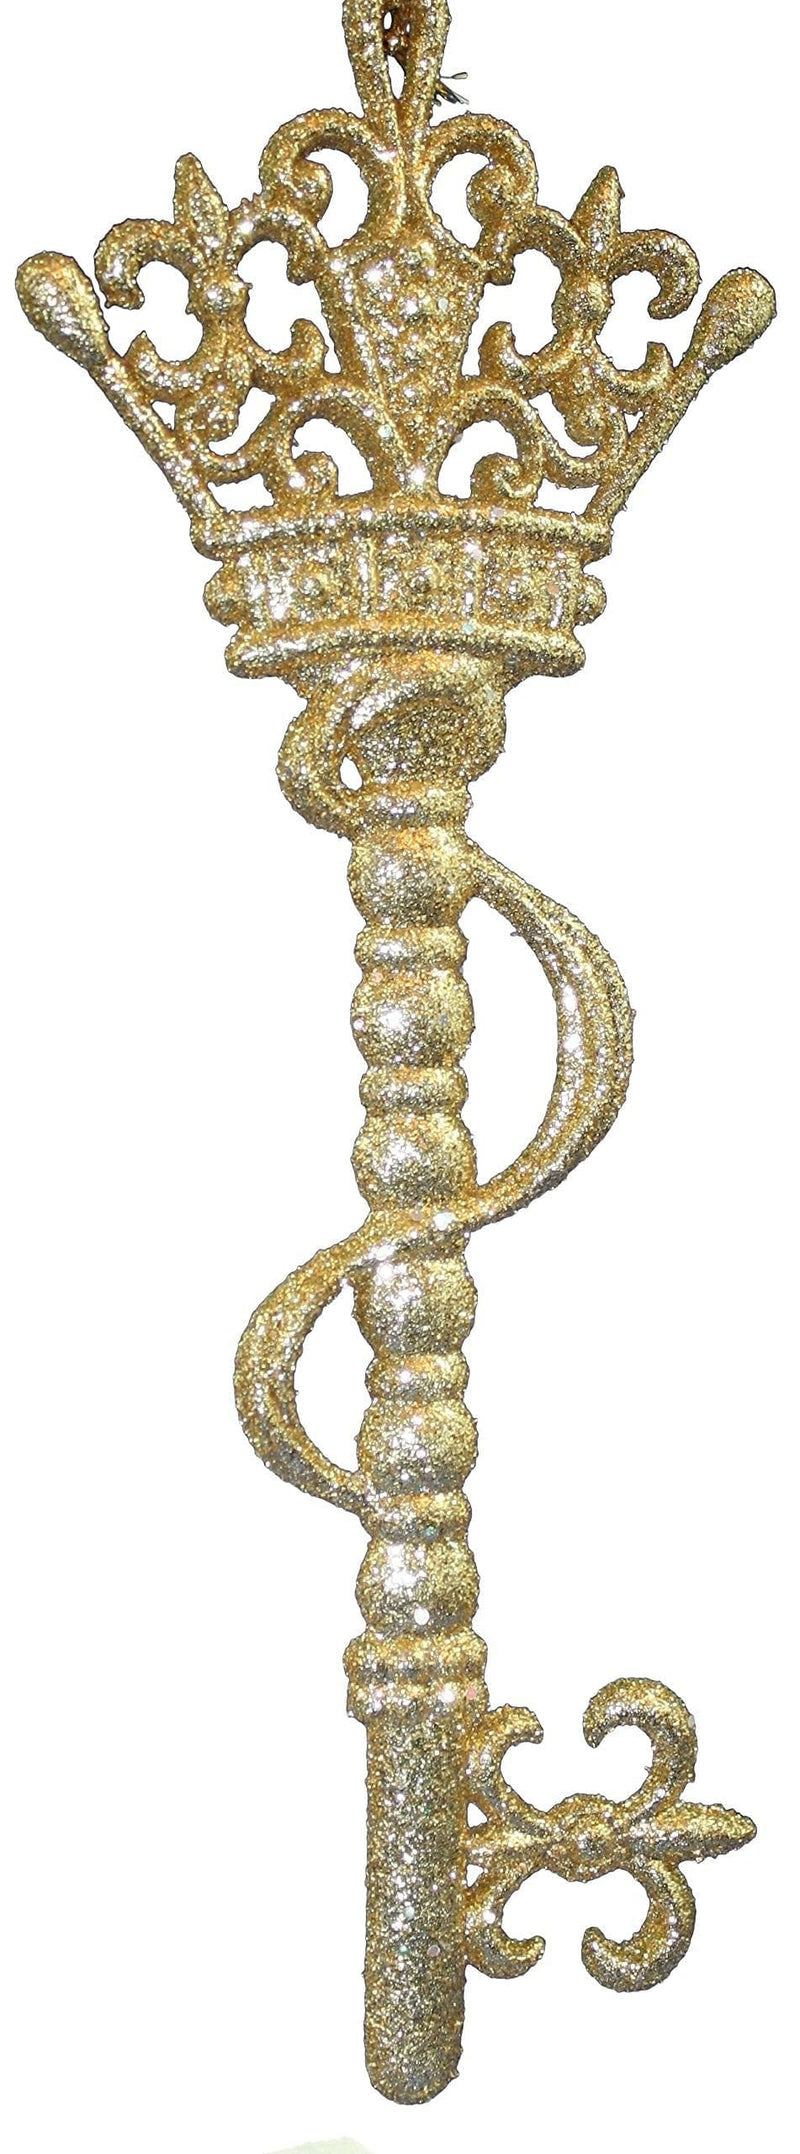 8 Inch Gold Glitter Plastic Key Ornament - King - Shelburne Country Store